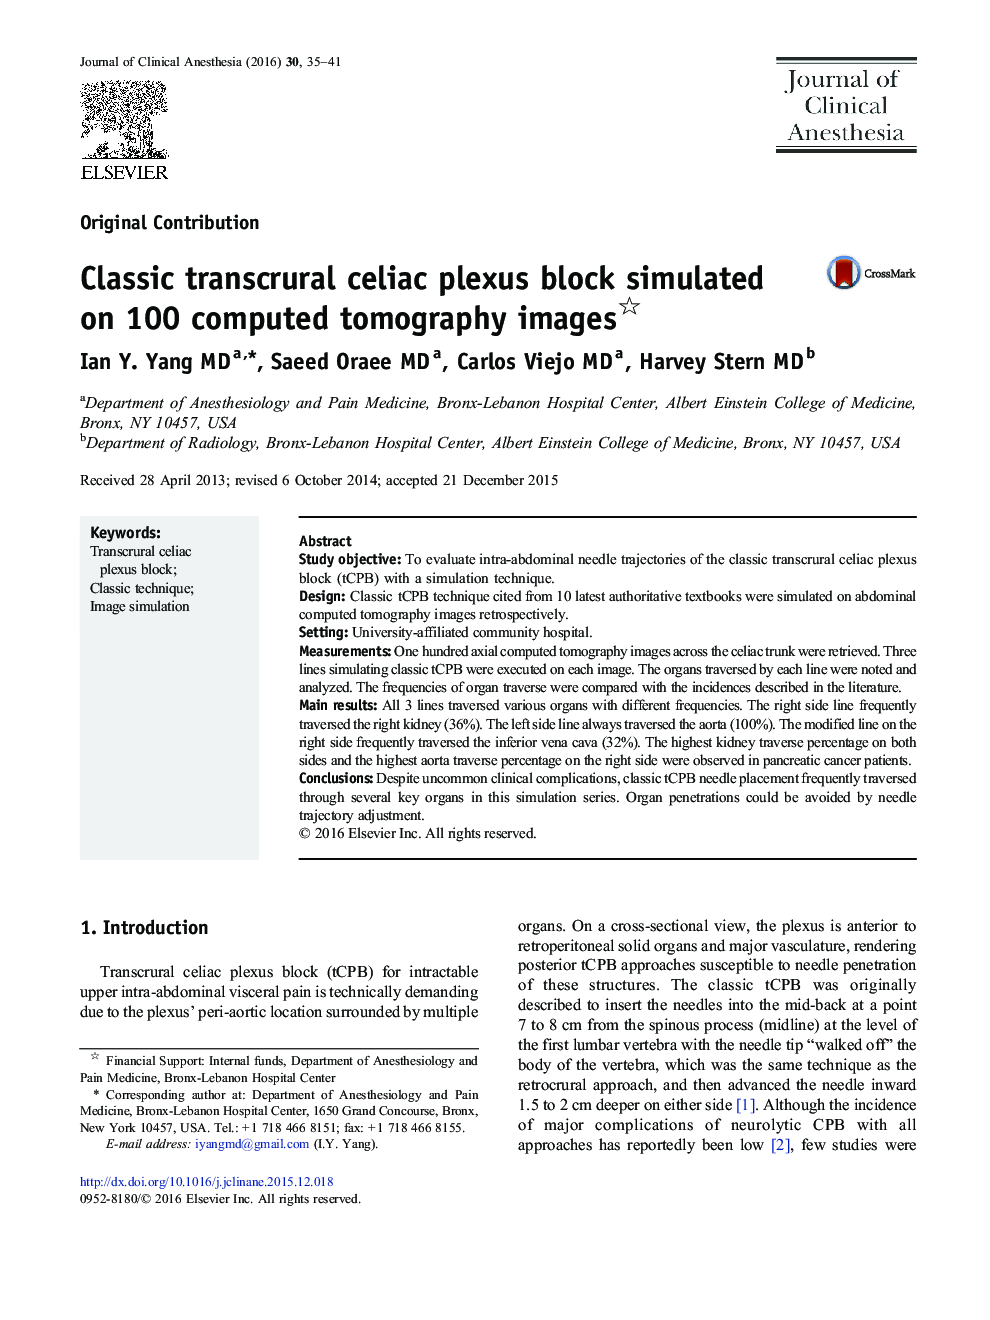 Original ContributionClassic transcrural celiac plexus block simulated on 100 computed tomography images